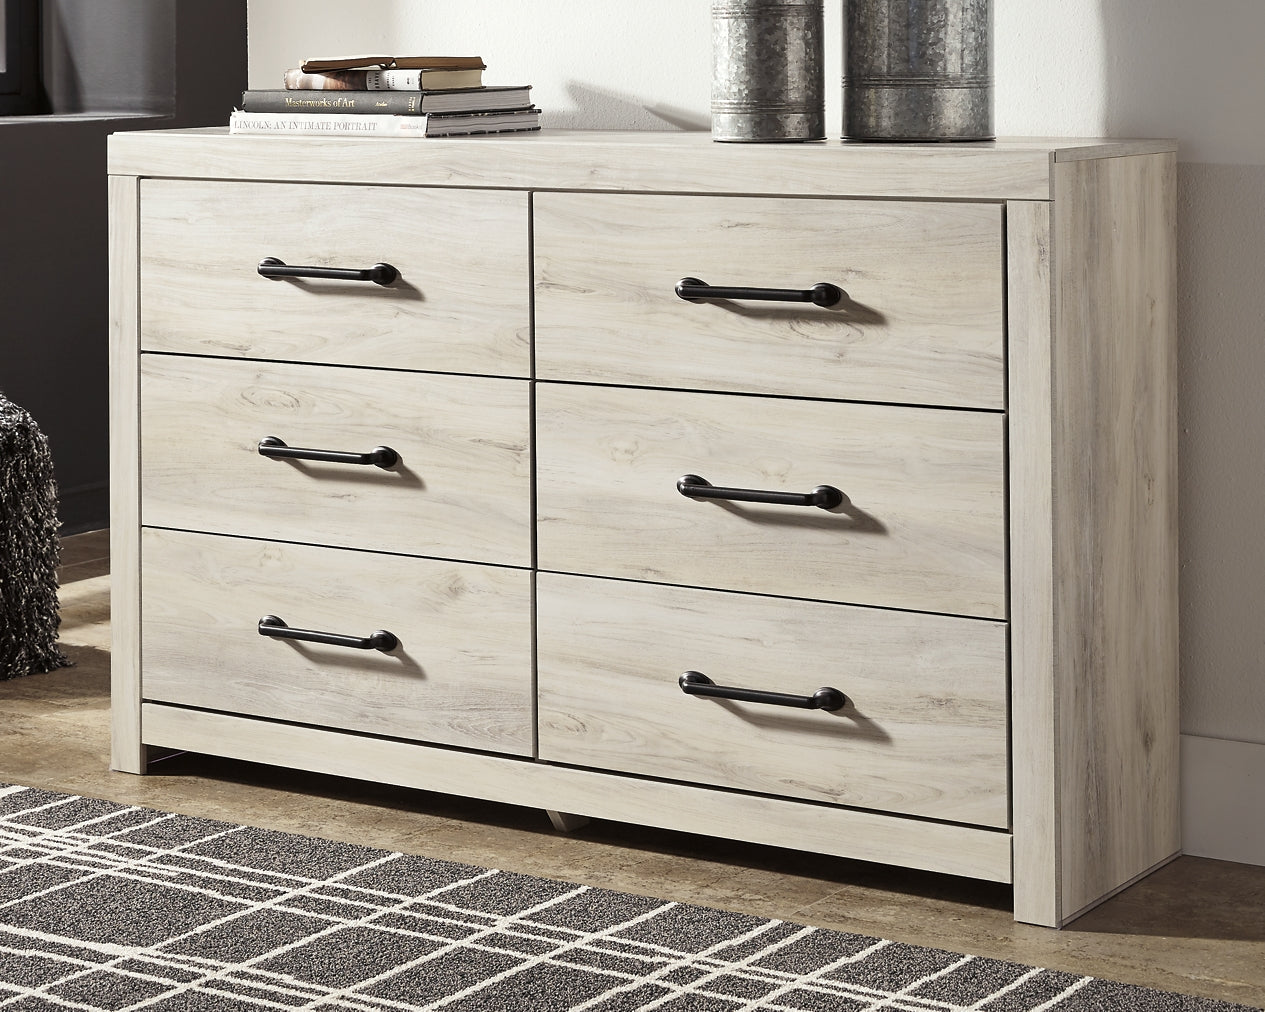 Cambeck Queen Panel Bed with Dresser Cloud 9 Mattress & Furniture